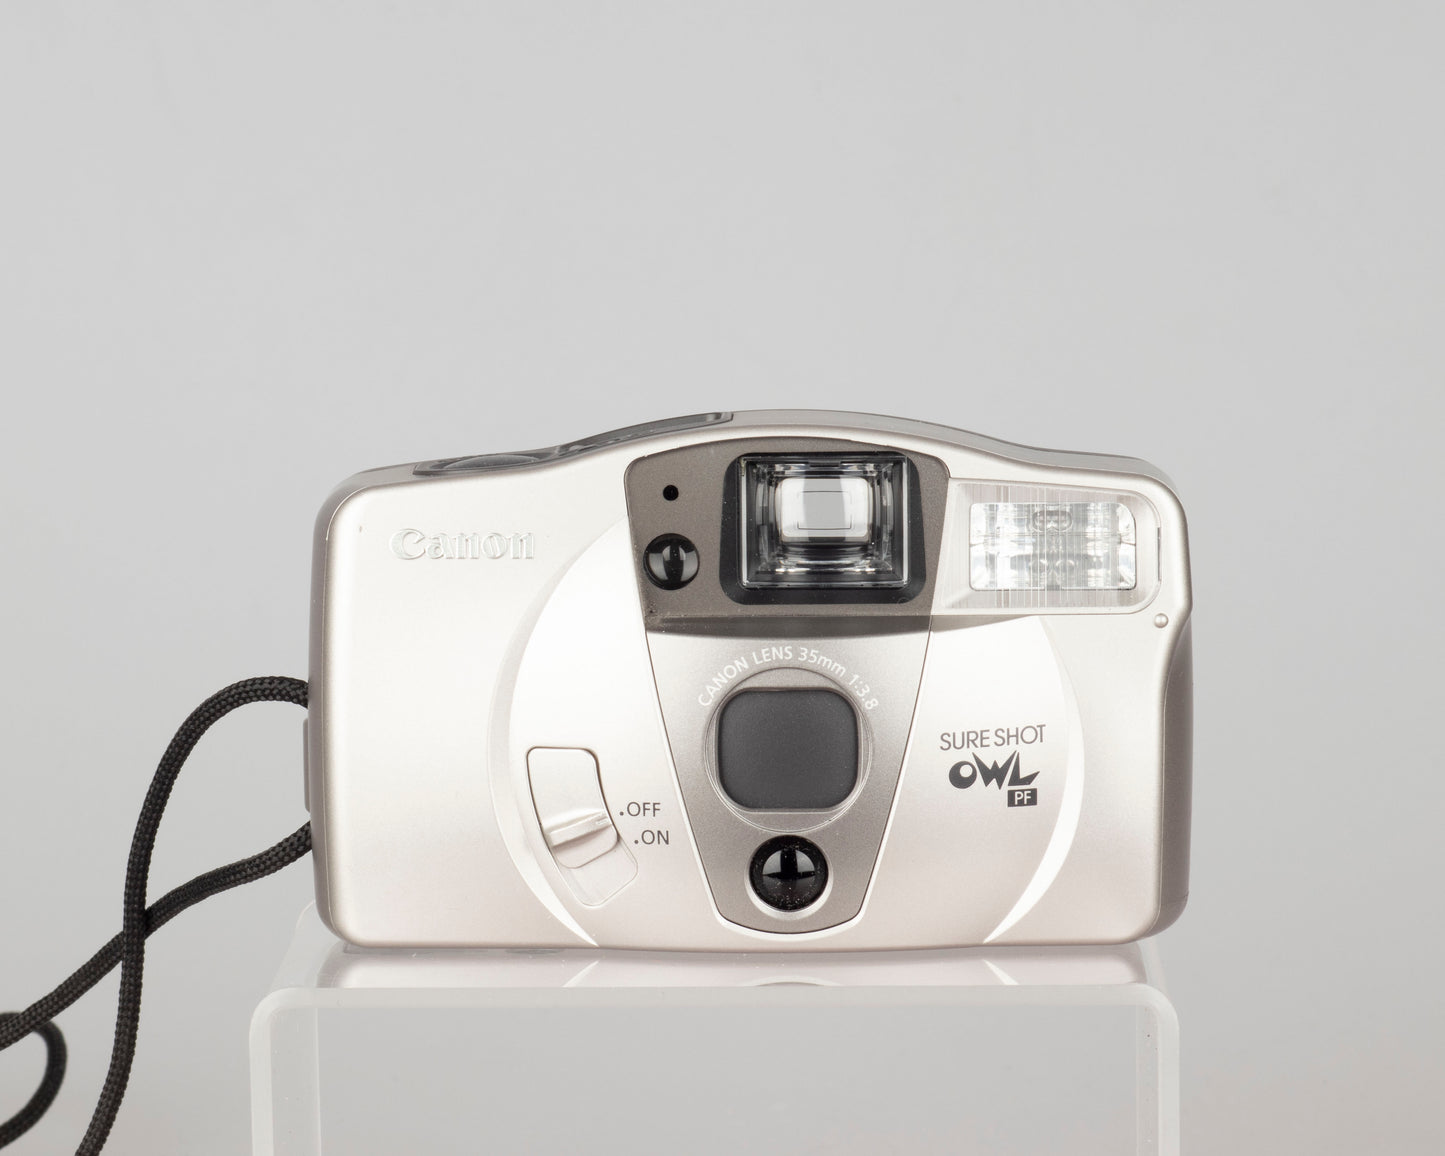 Canon Sure Shot Owl PF 35mm film camera (serial 7517894)